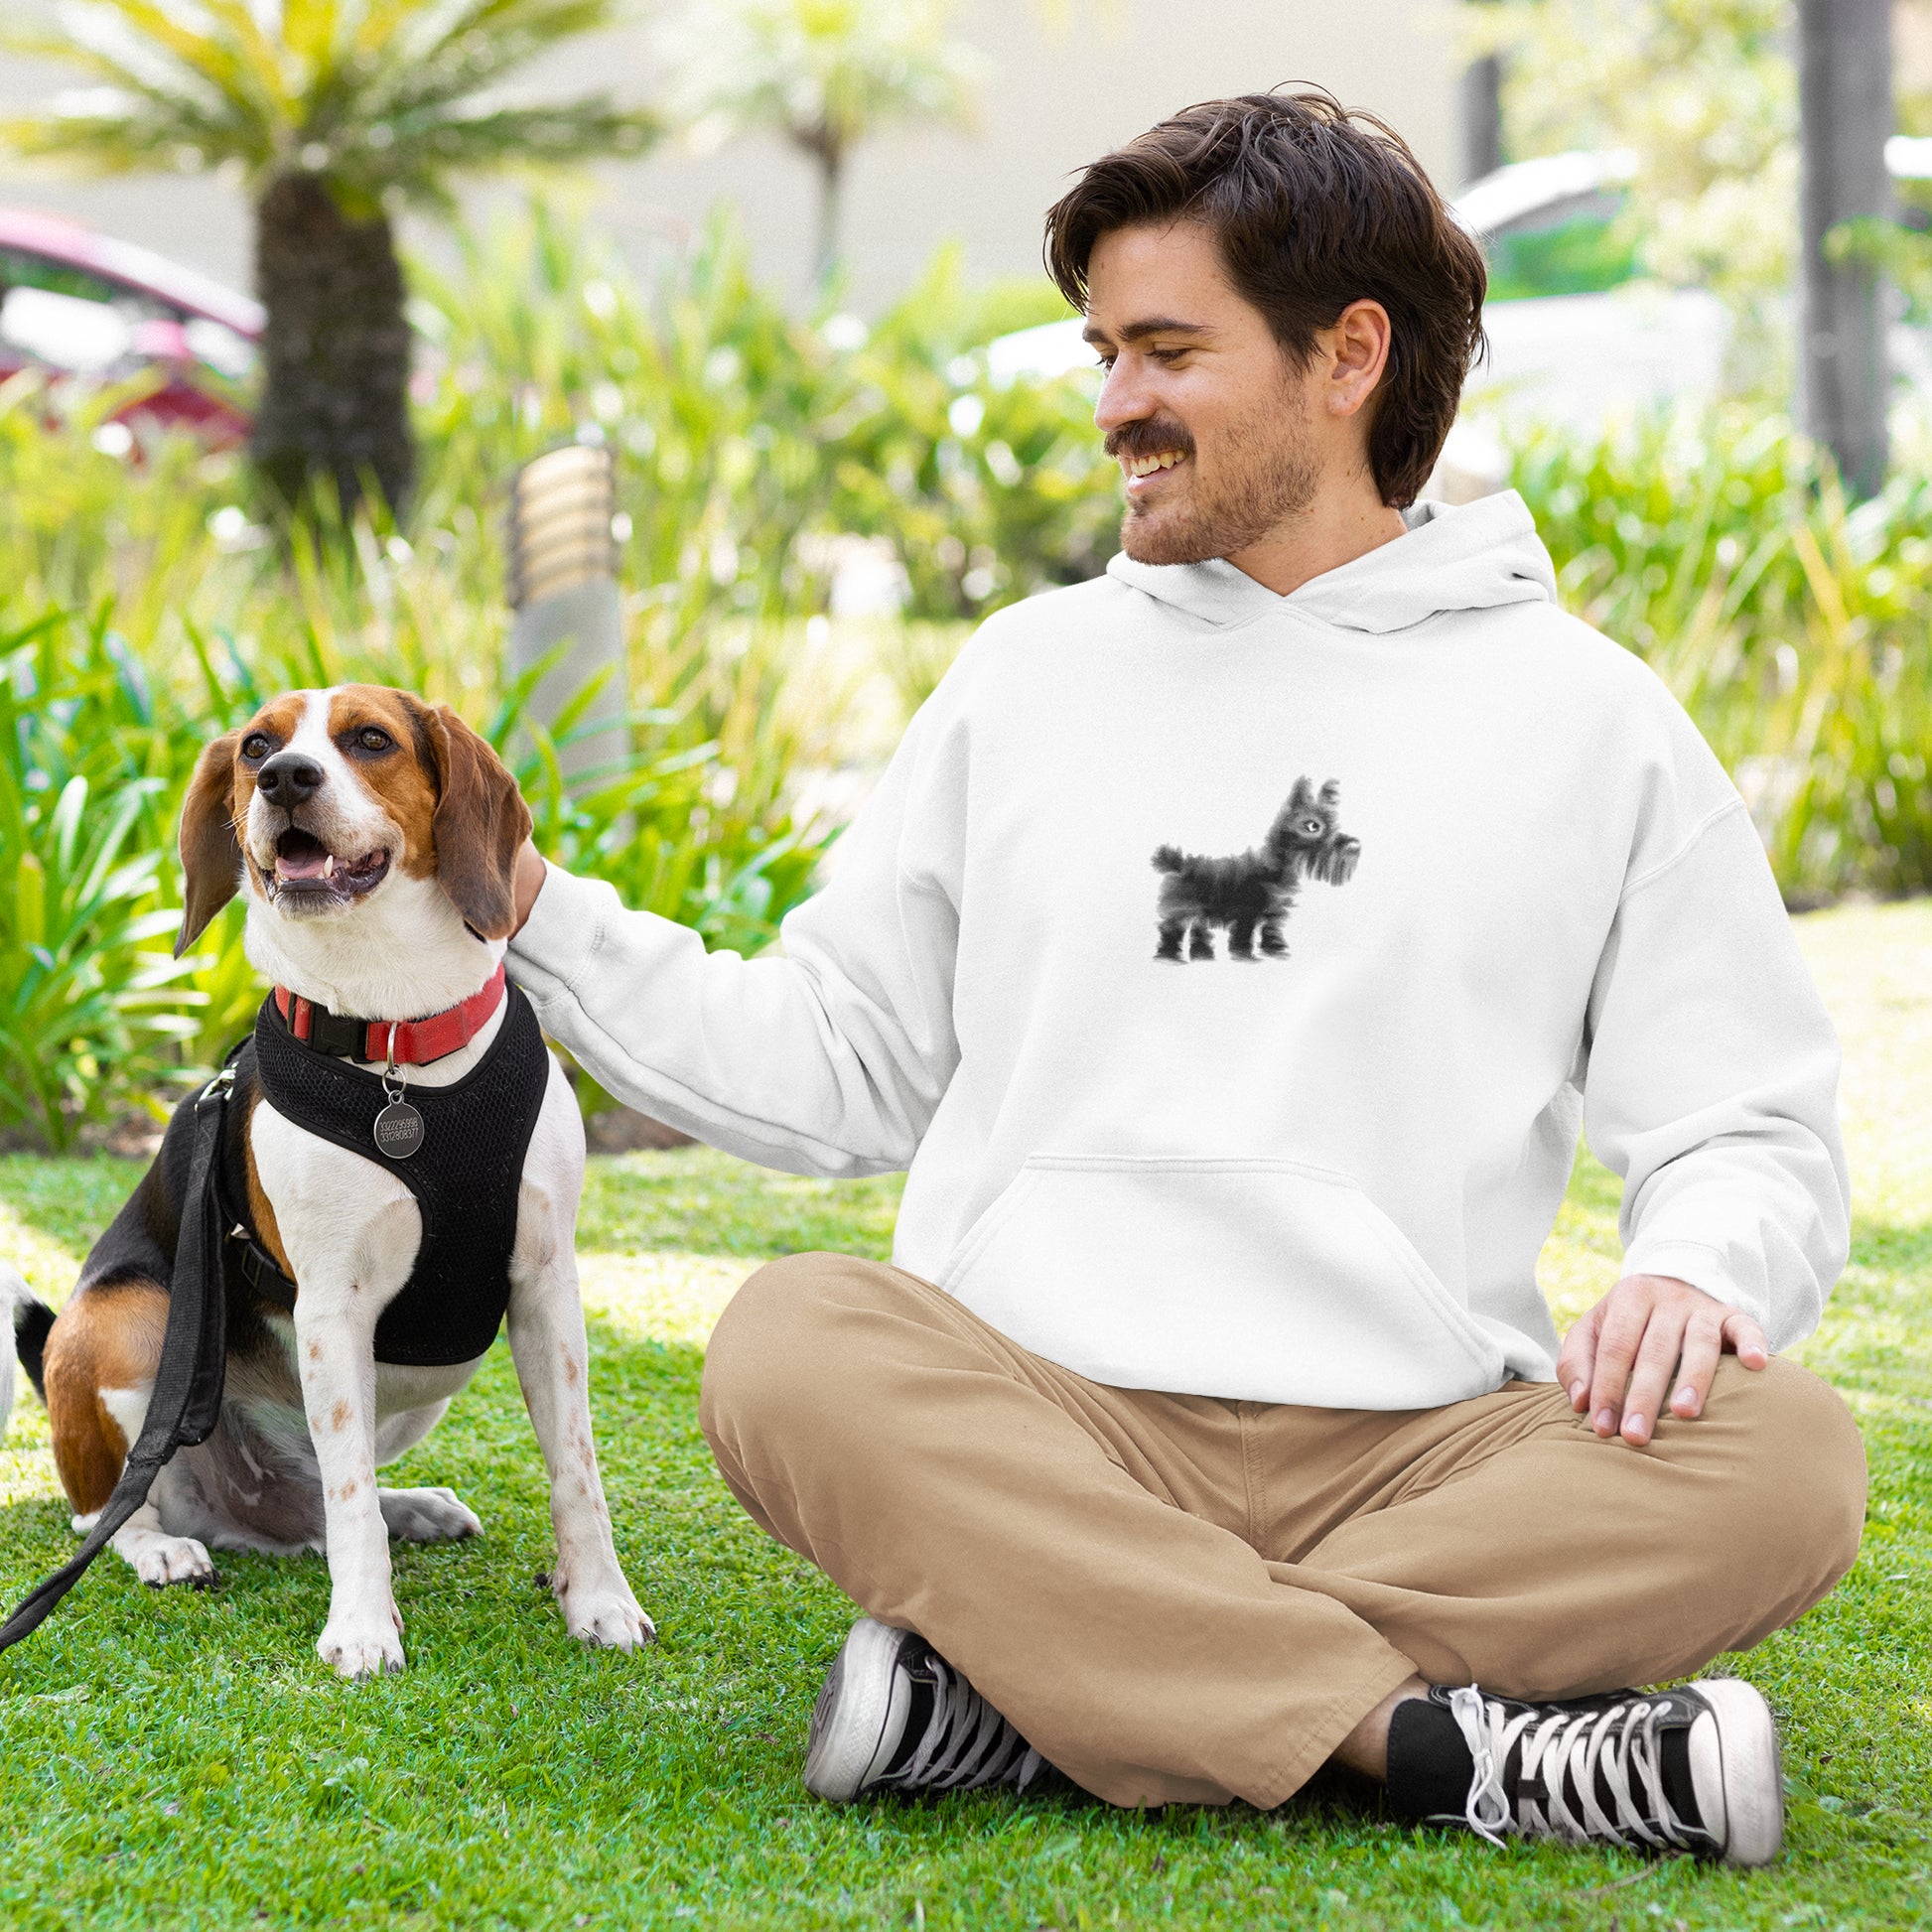 Scottie Dog | Sustainable Hoodie worn by a man